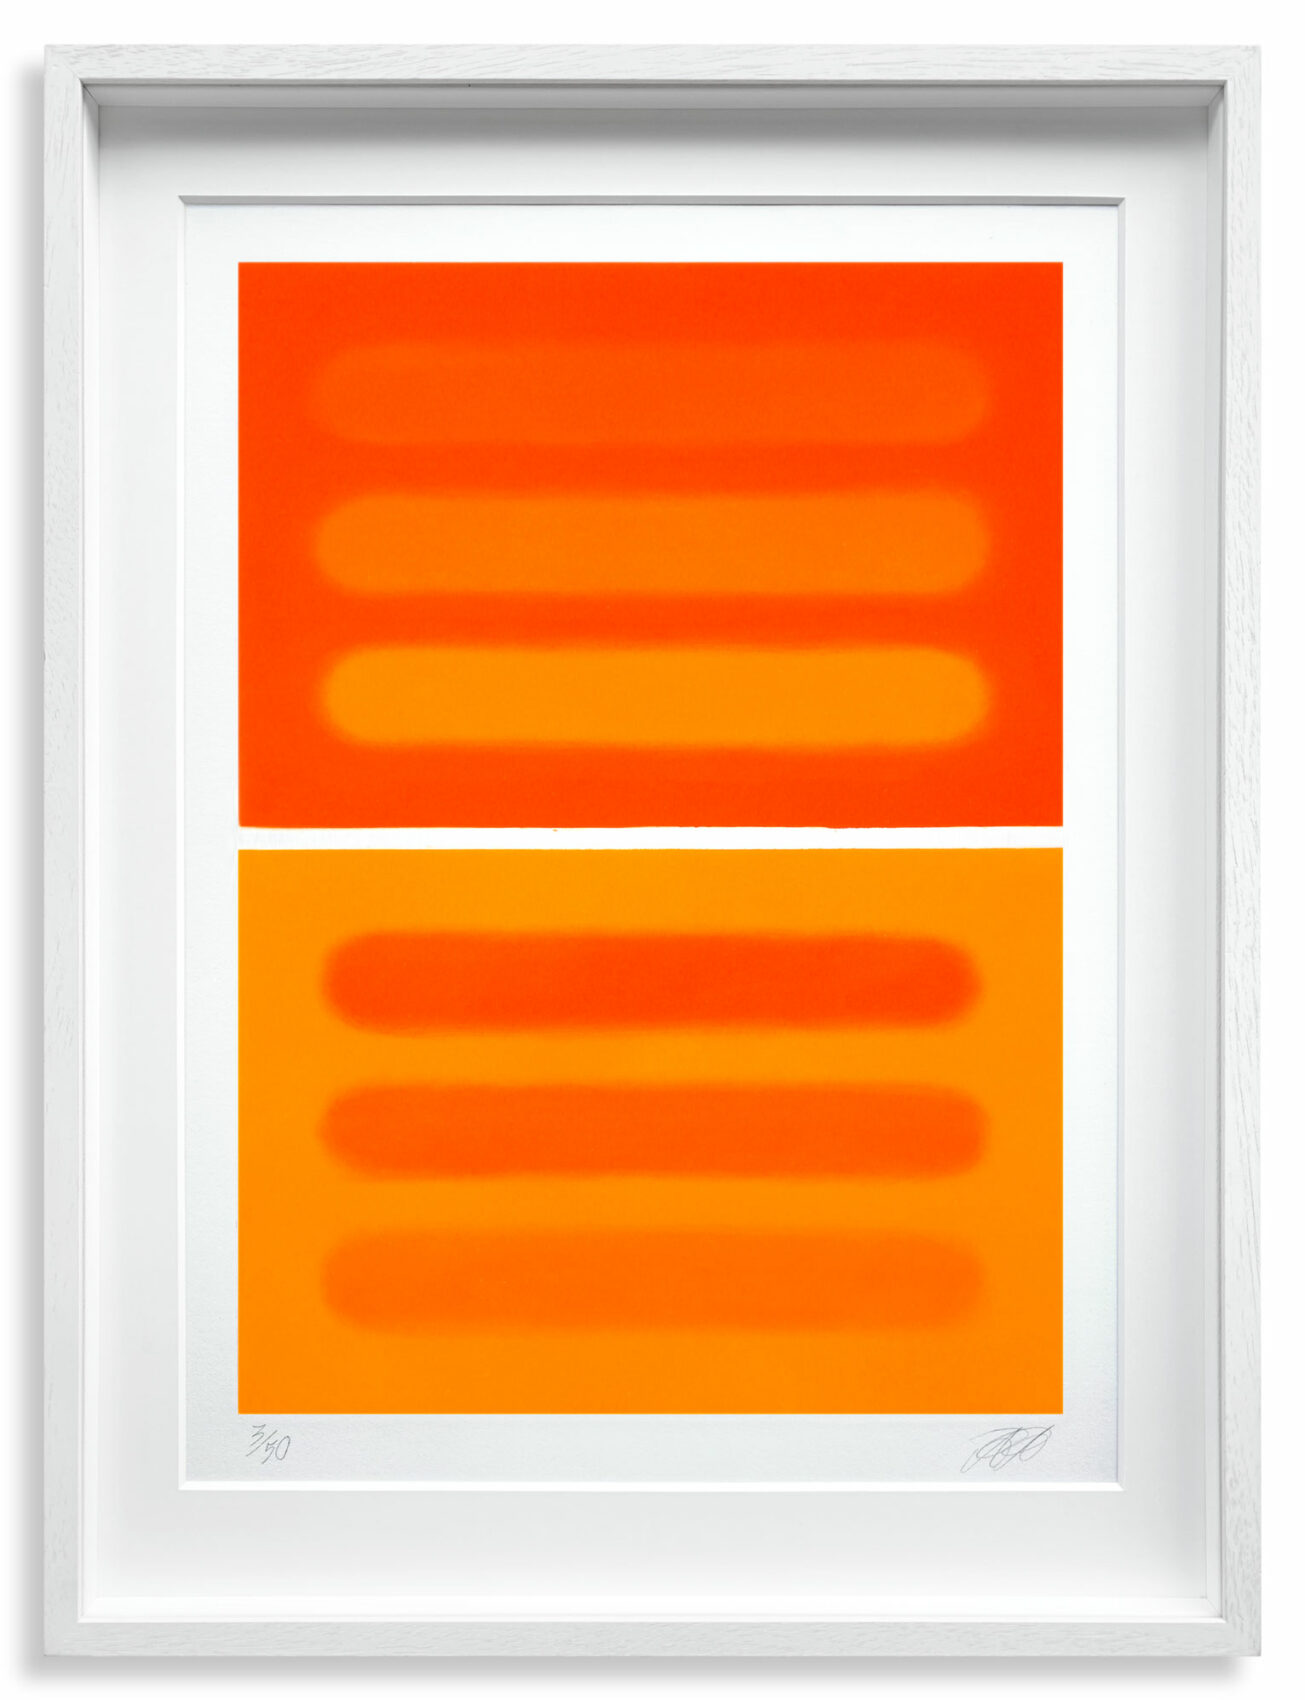 Dreipunkt_Edition_Alexander Arundell_Fuzzy Bars Orange framed_Mezzotinto_80 x 60 cm framed_€ 600